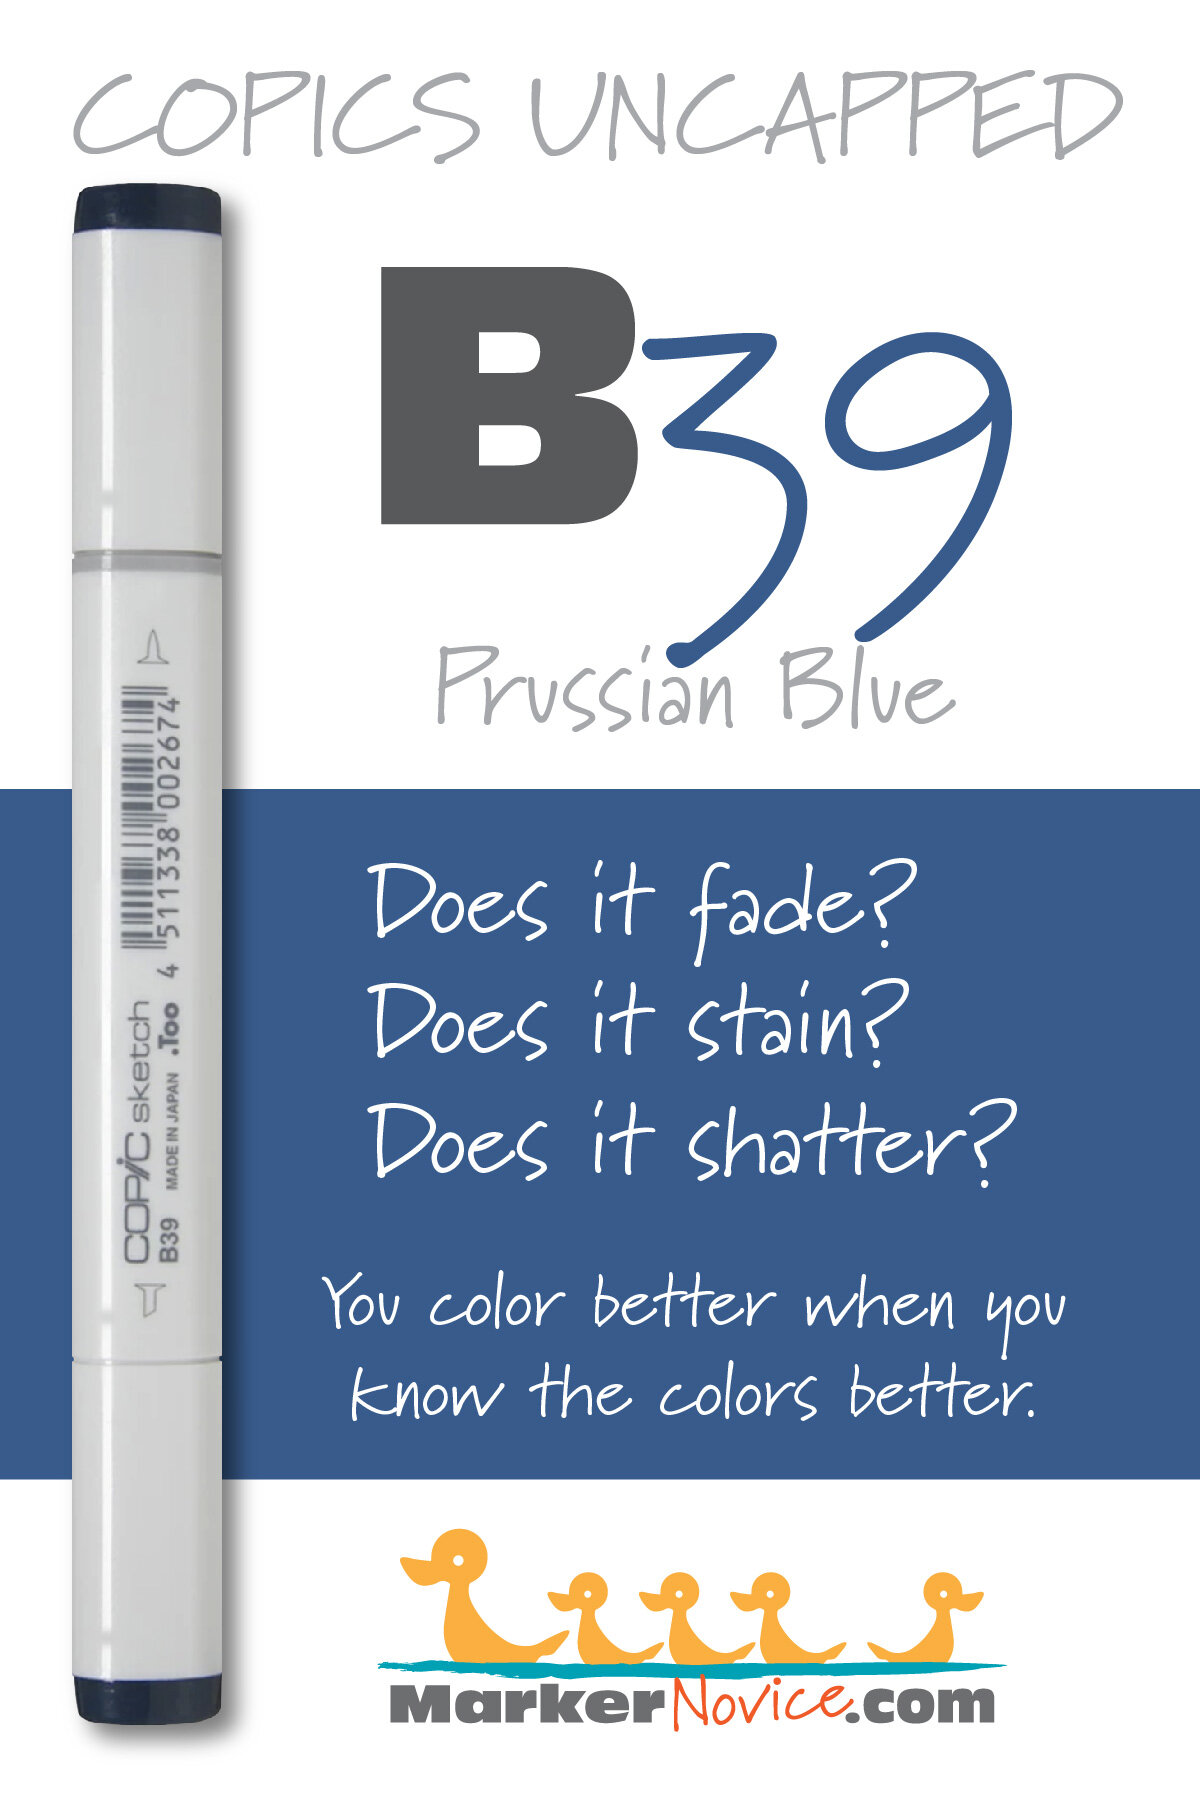 PB3 Cobalt Blue: Testing Ohuhu Markers for Lightfastness and